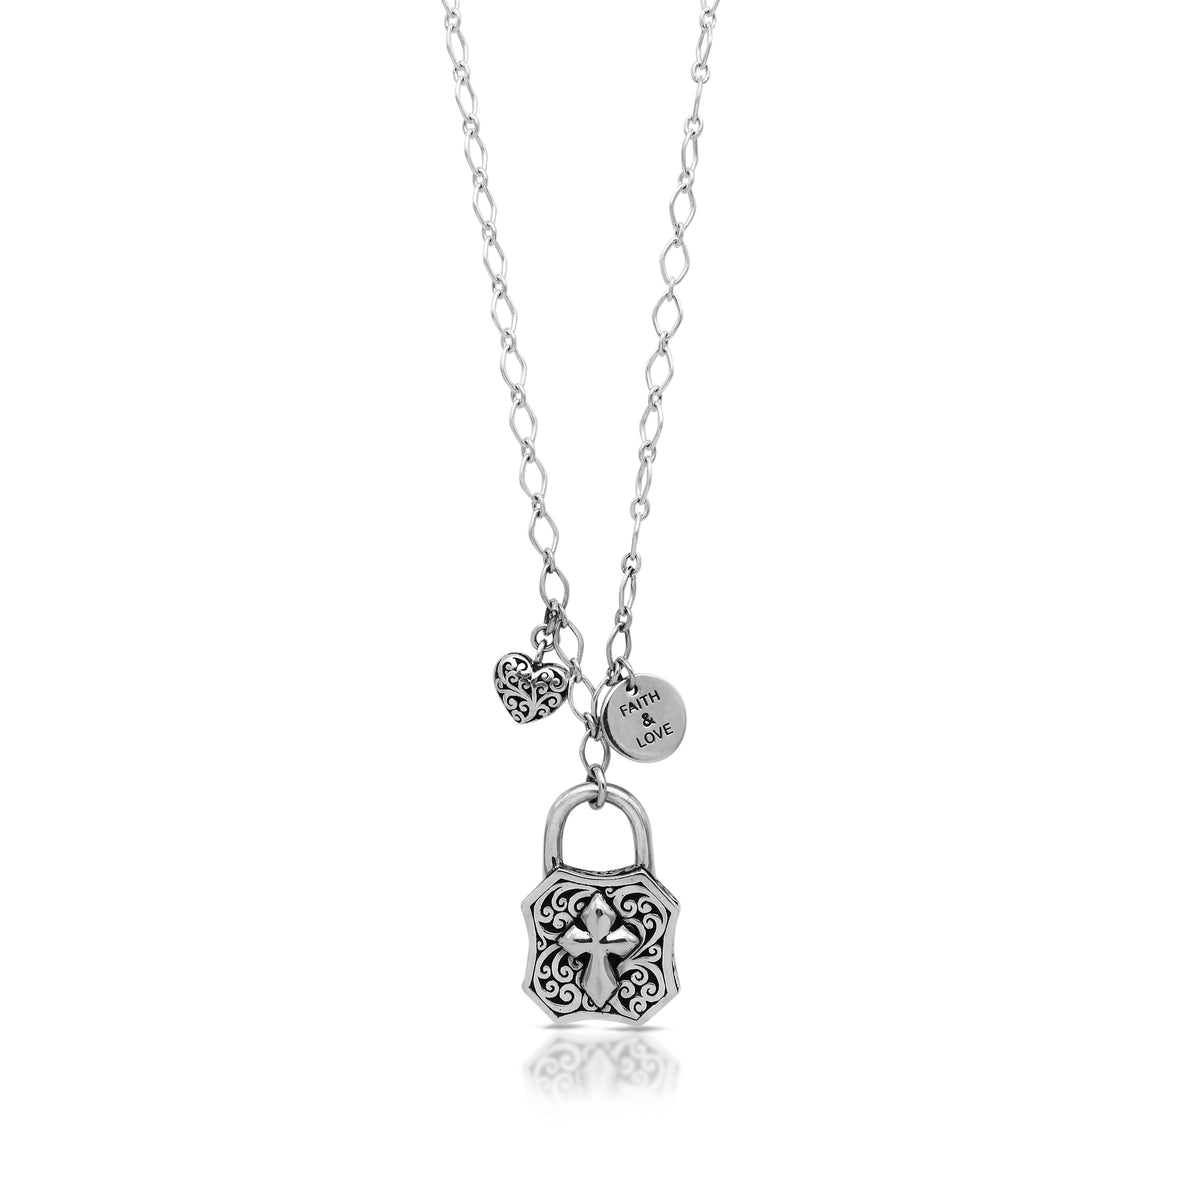 LH Scroll Maltese Cross Padlock Pendant (17*26mm) with "Faith & Love" Charm Necklace 18"